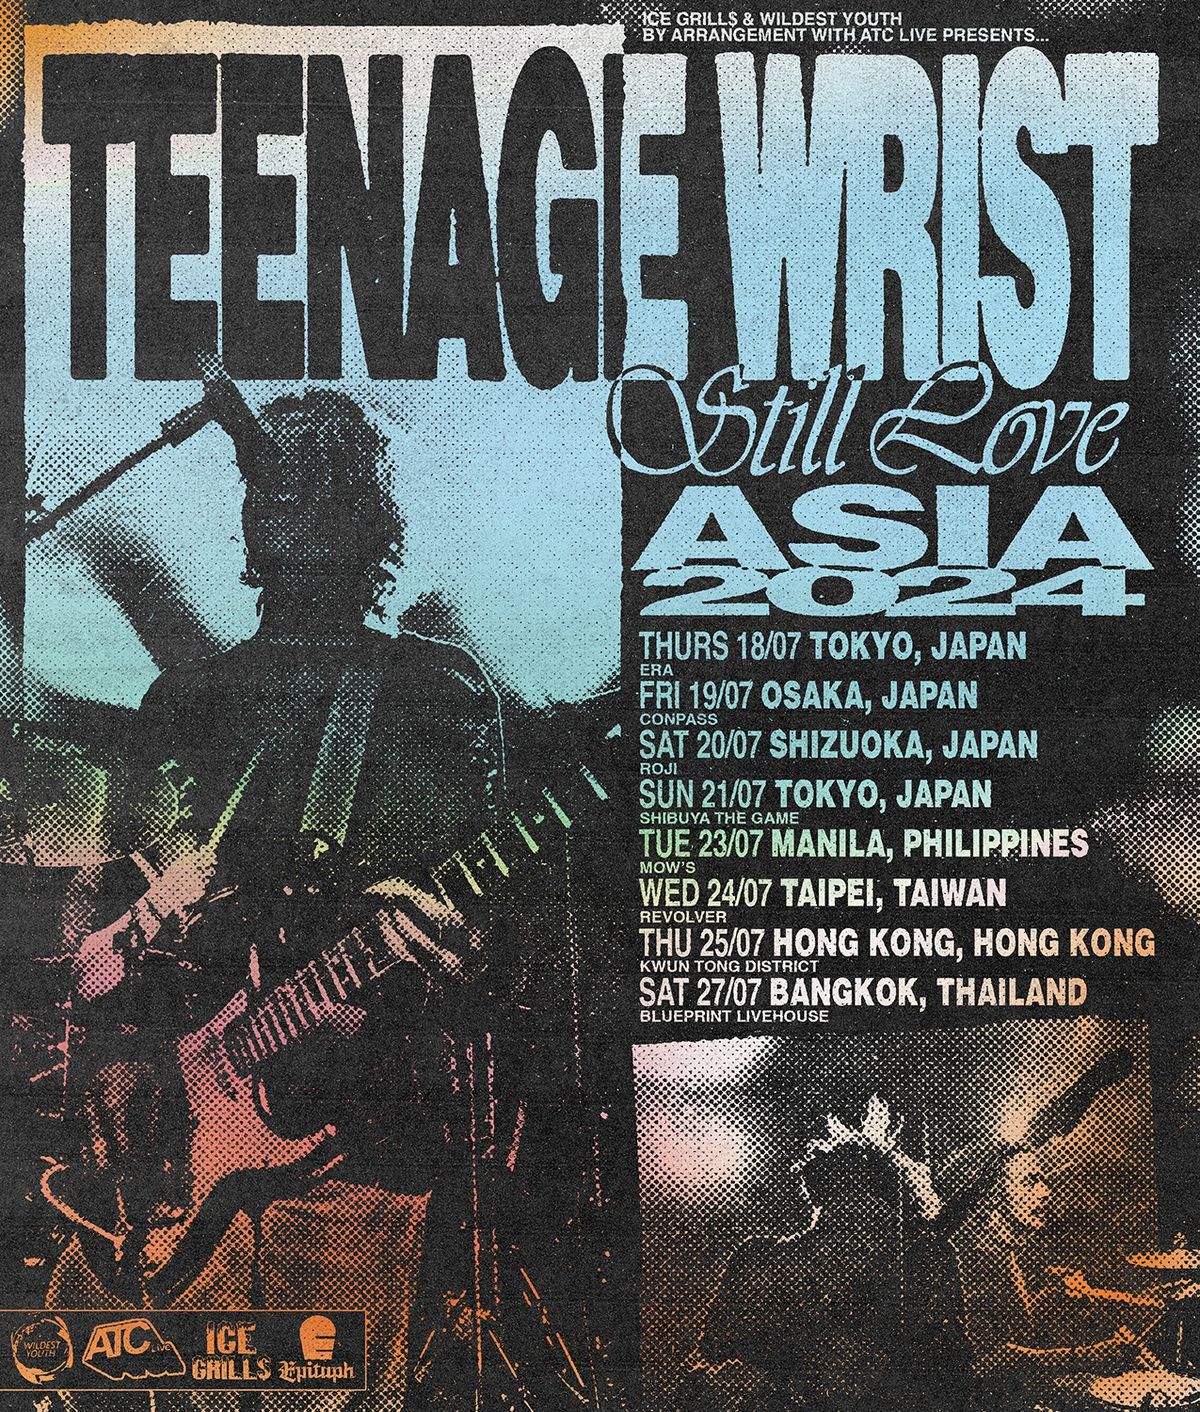 Teenage Wrist | 'Still Love' Tour - Bangkok